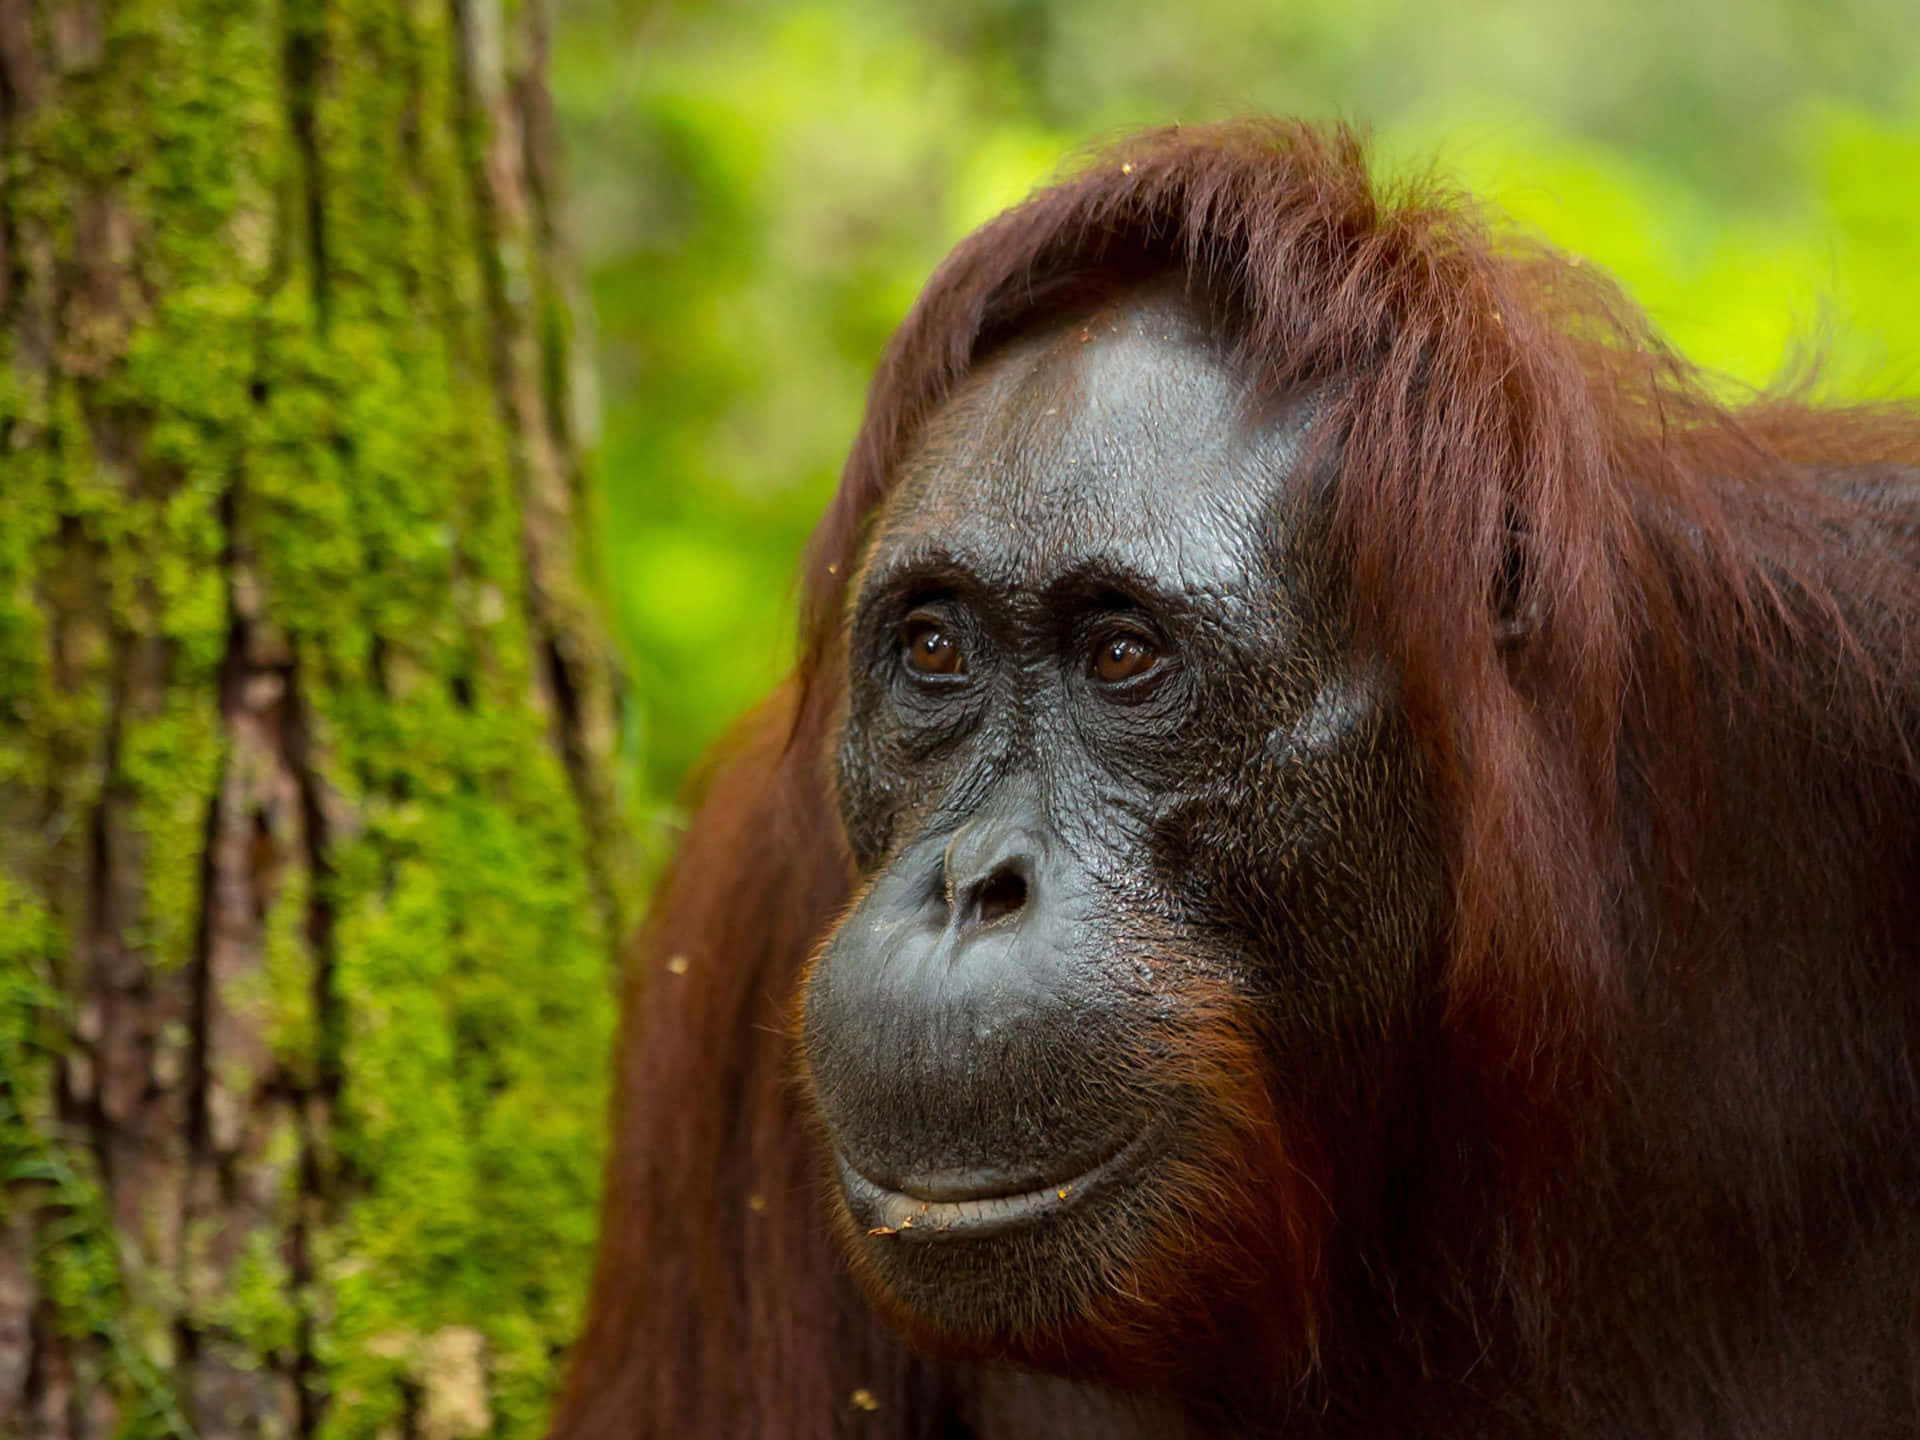 Reddish-orange Hair Gray Skin Orangutan Background